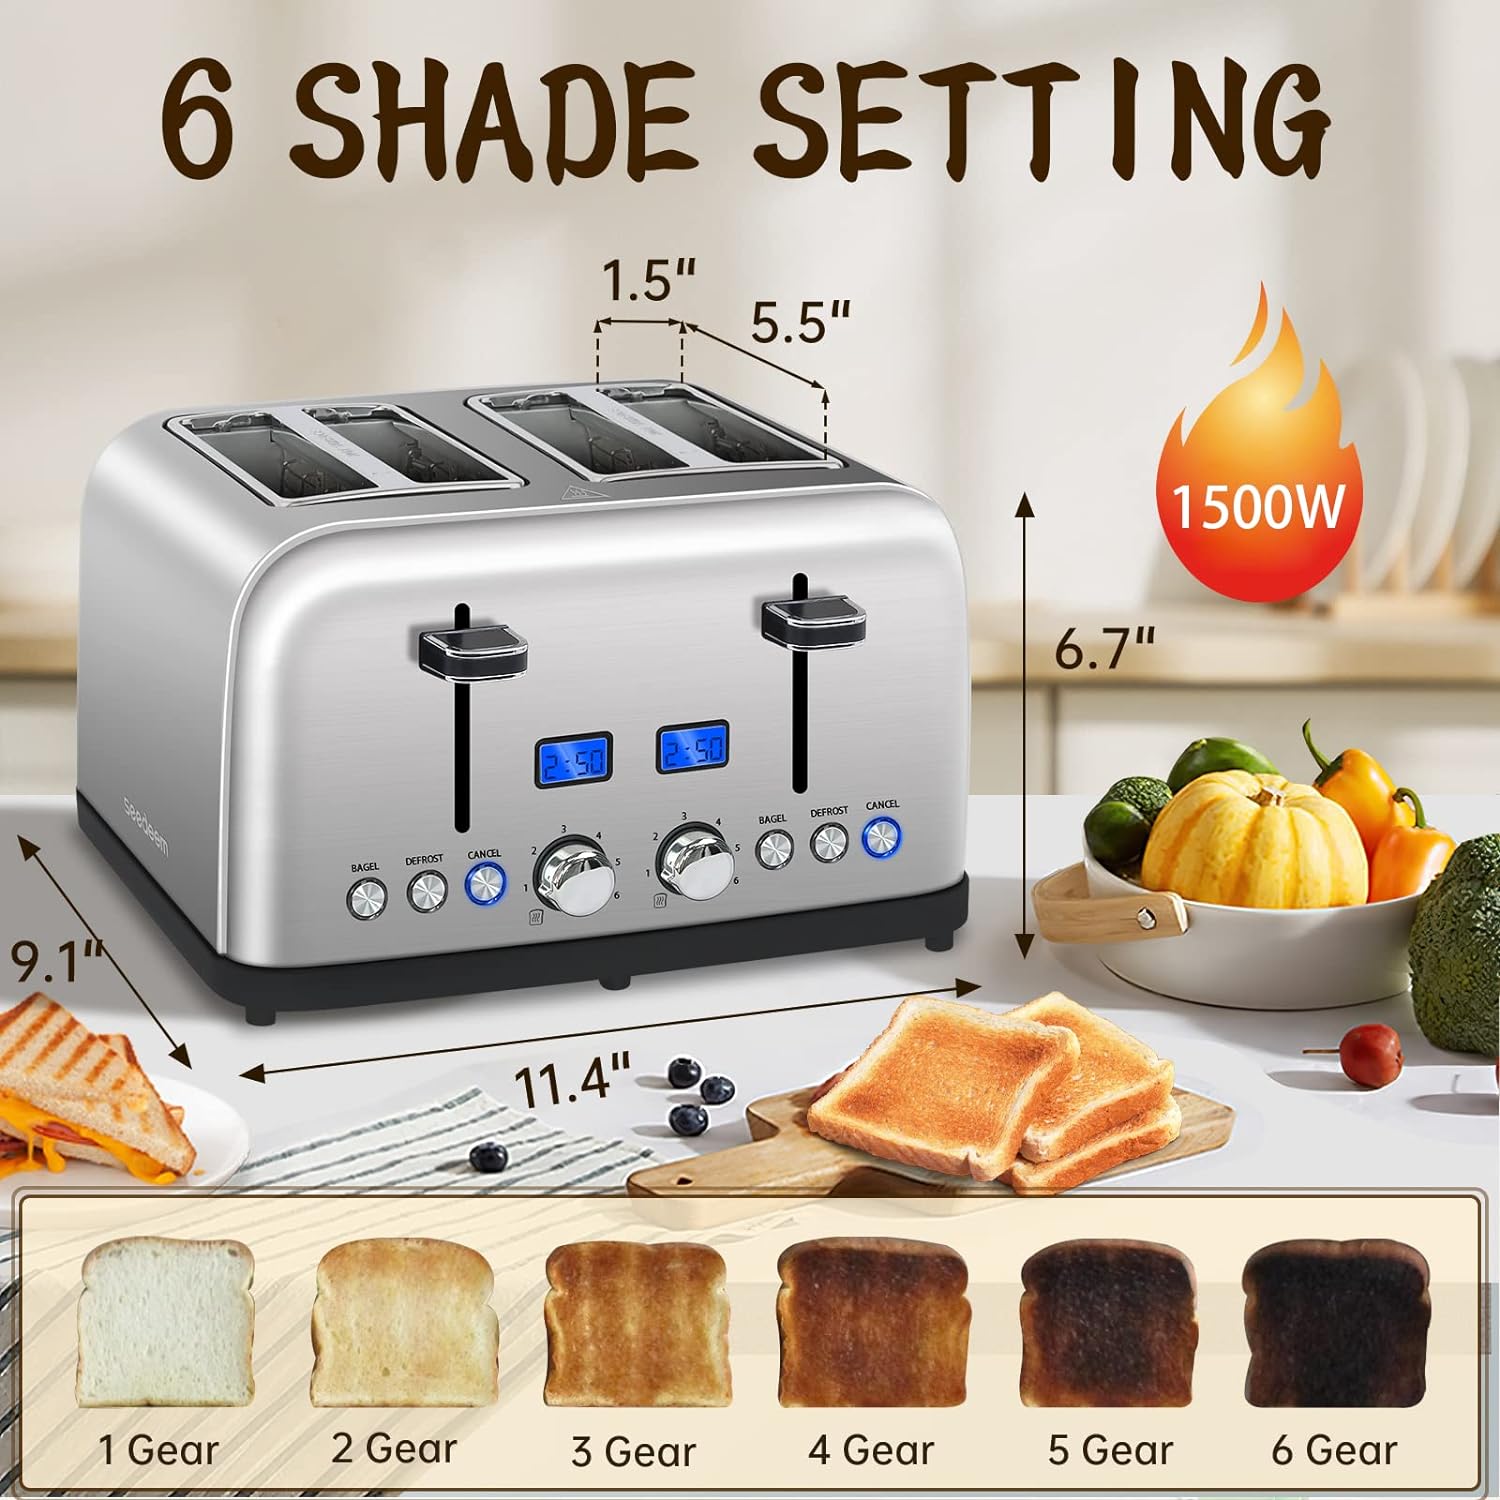 SEEDEEM Toaster 4 Slice, LCD Display, 6 Shade Settings Stainless